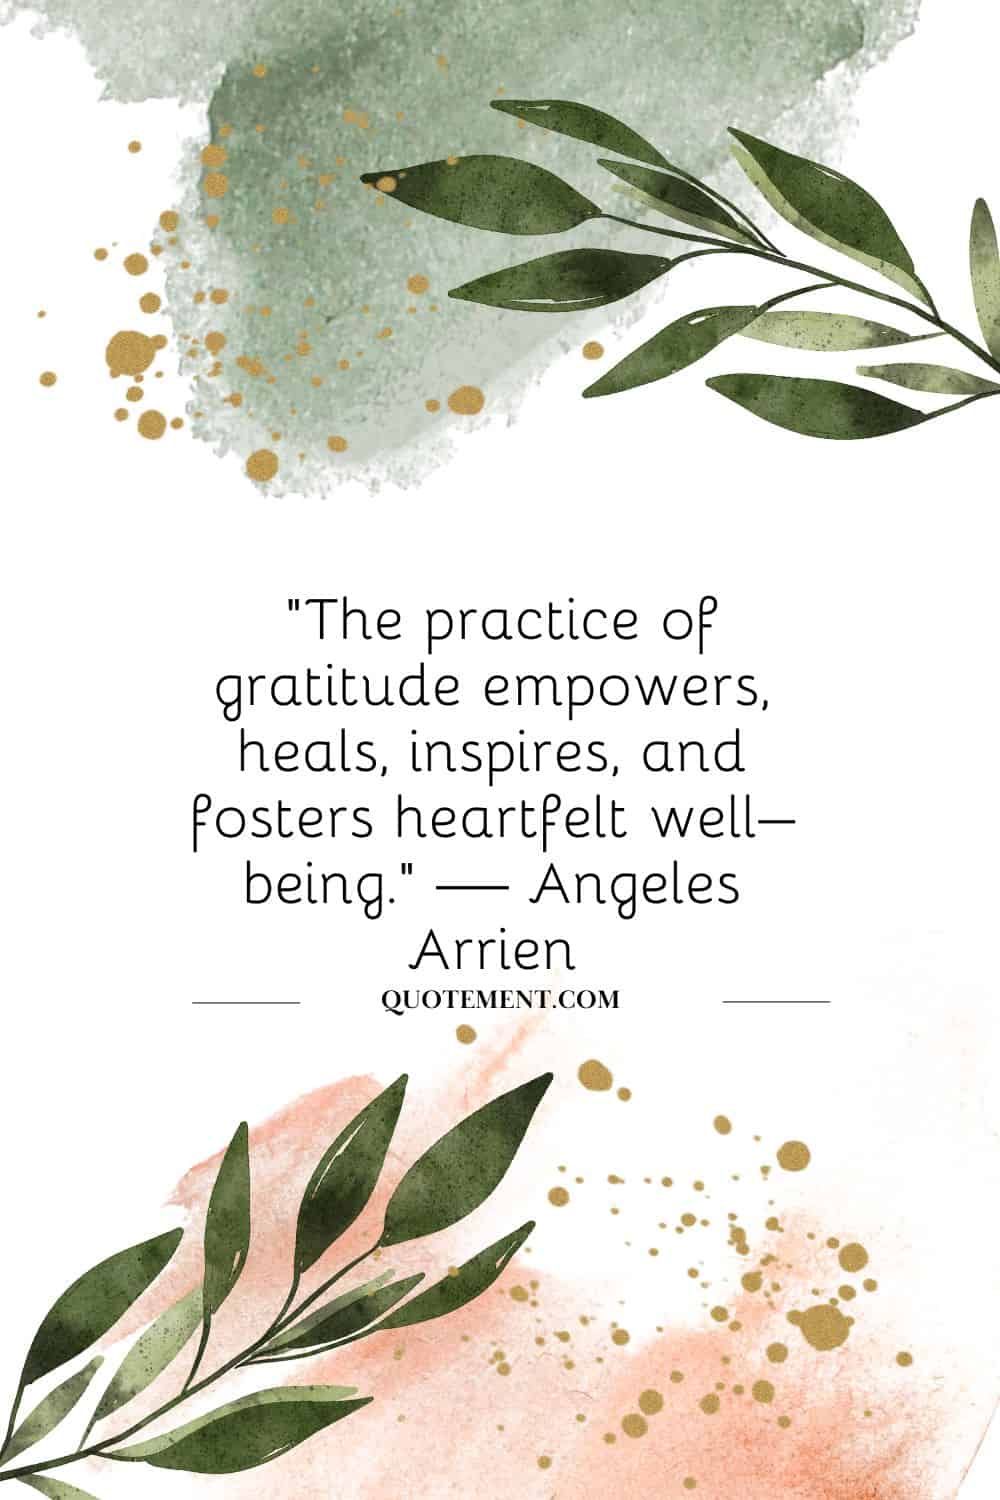 “The practice of gratitude empowers, heals, inspires, and fosters heartfelt well–being.” — Angeles Arrien